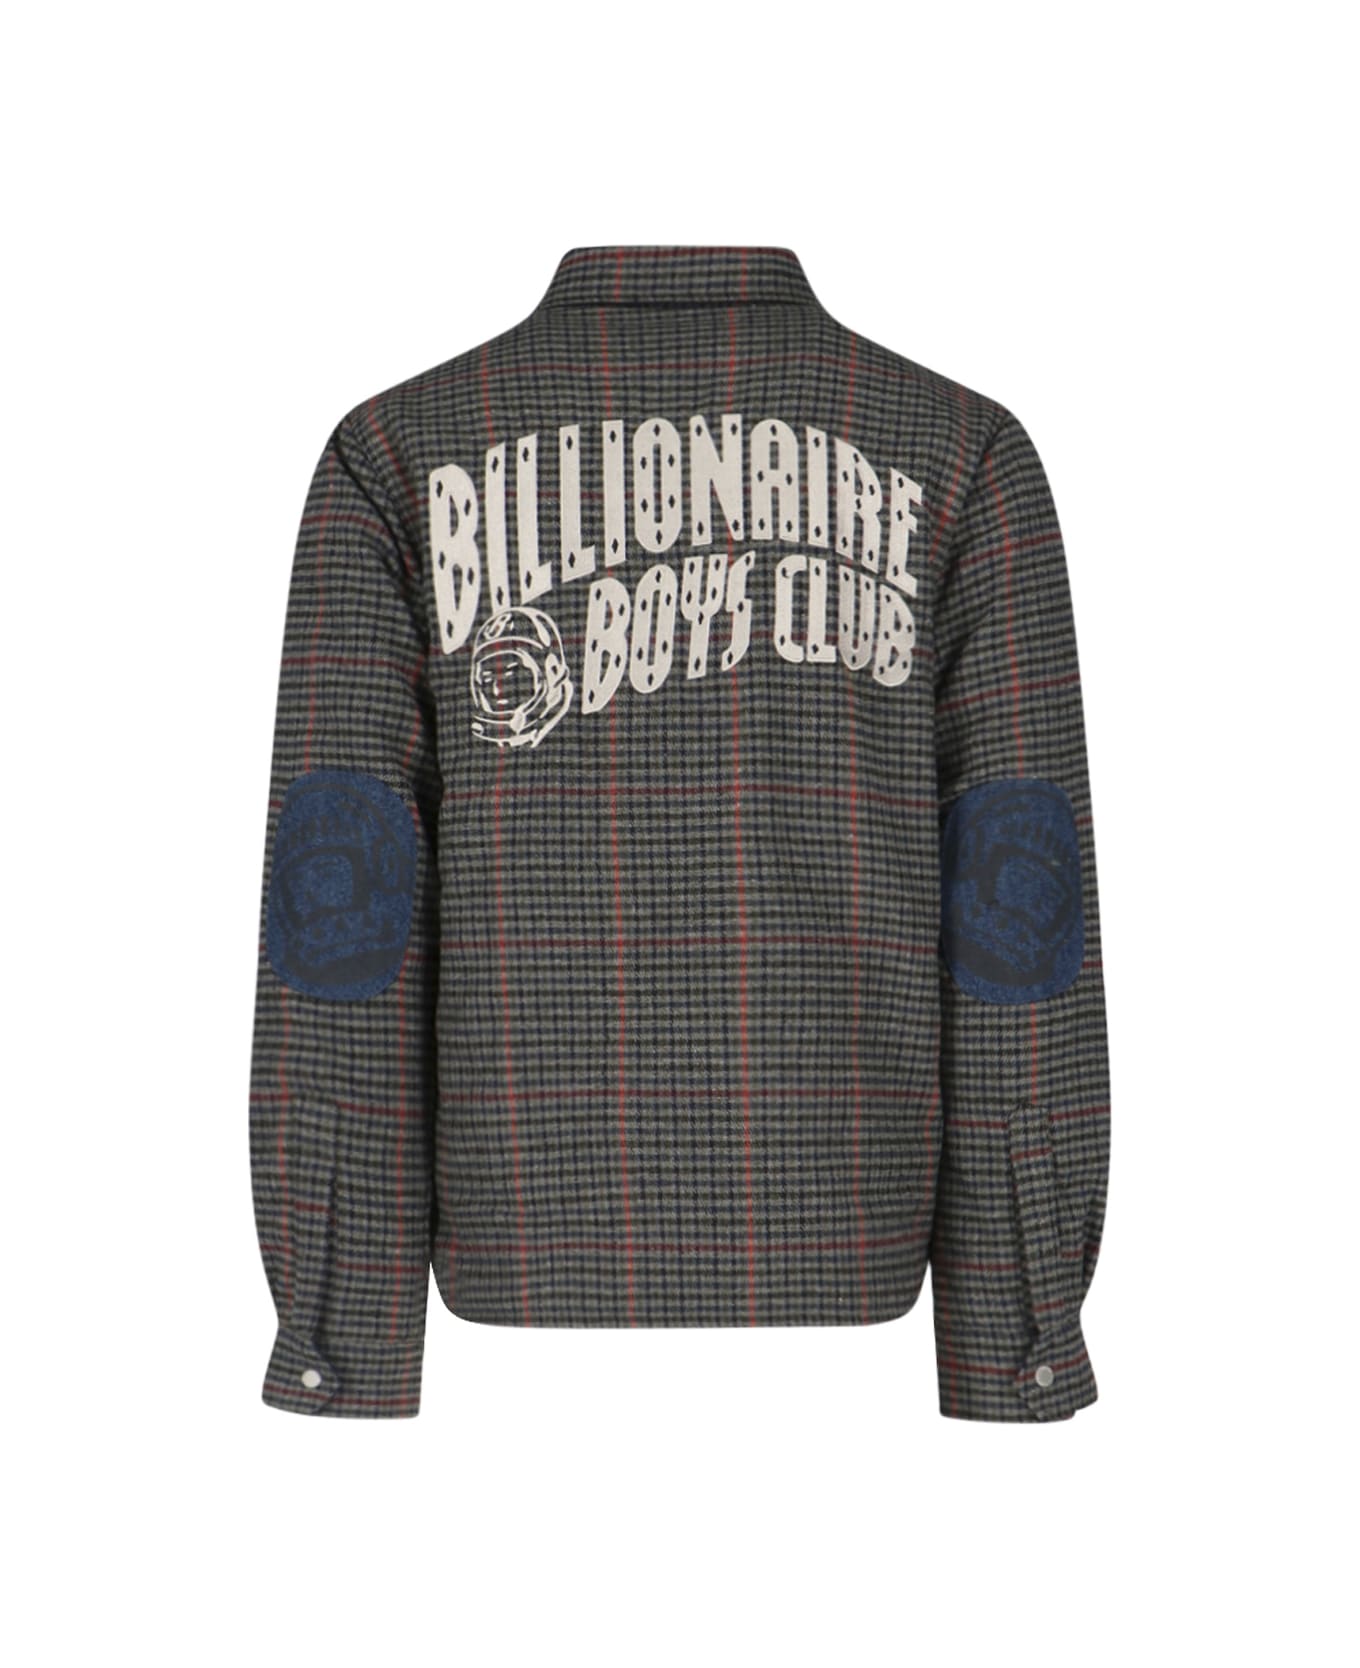 Billionaire Boys Club Jacket - Green